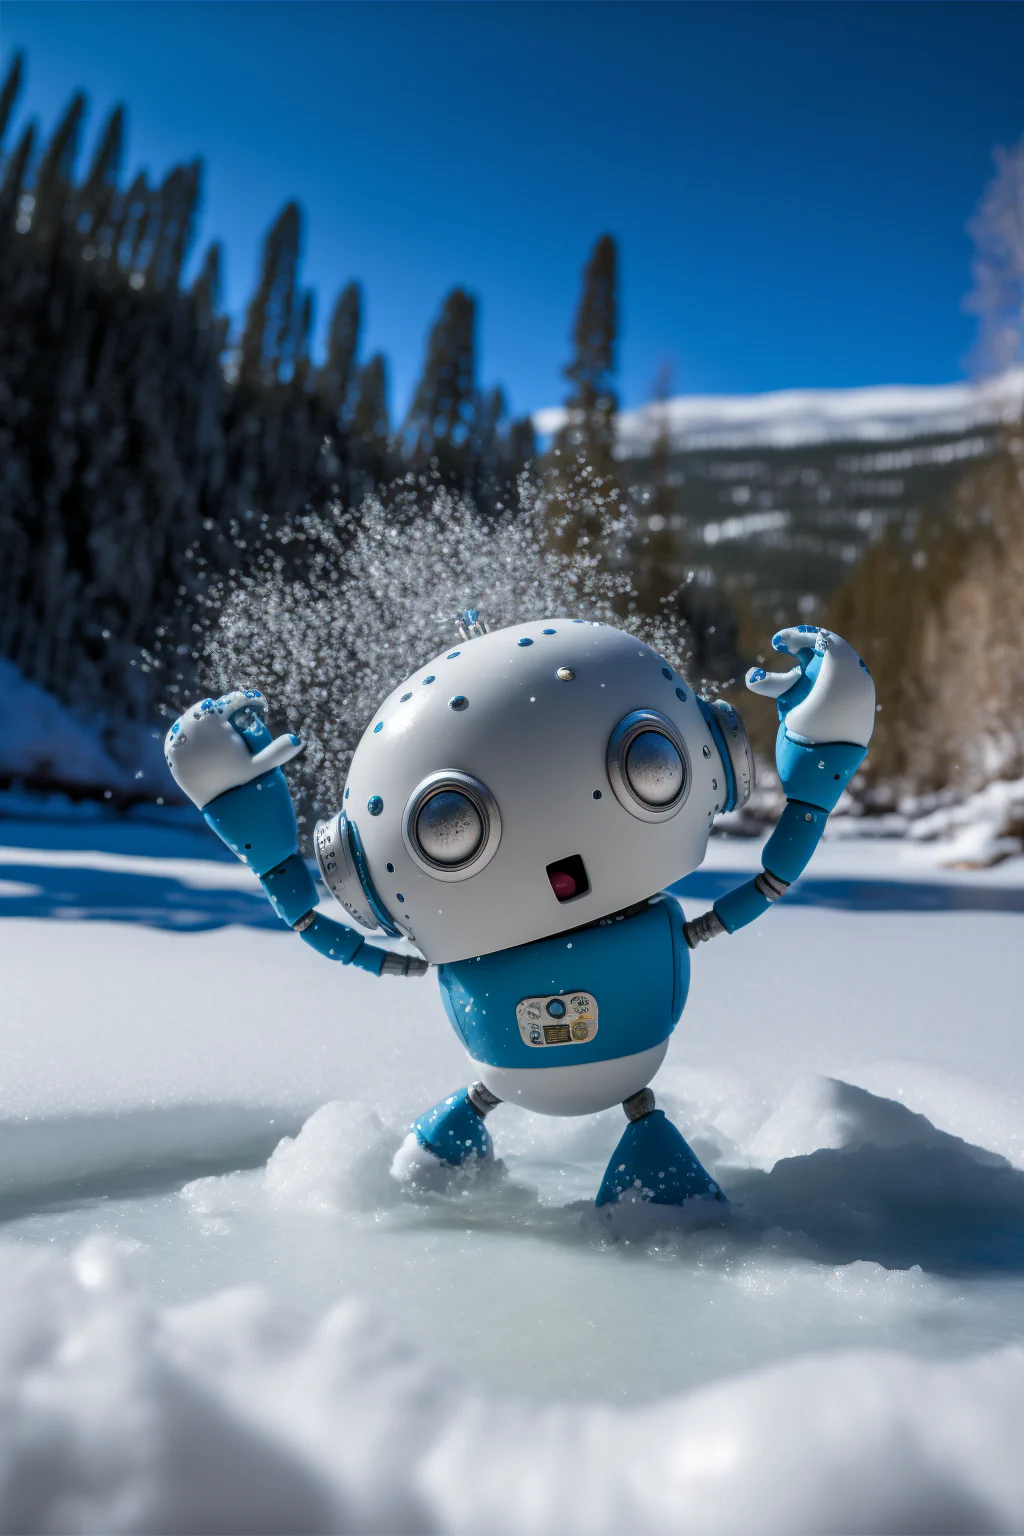 Christoph_C._Cemper_Cute_robot_dancing_snow_robotic_body_round__f36939f5-5453-4b08-bdbd-301ba001001c